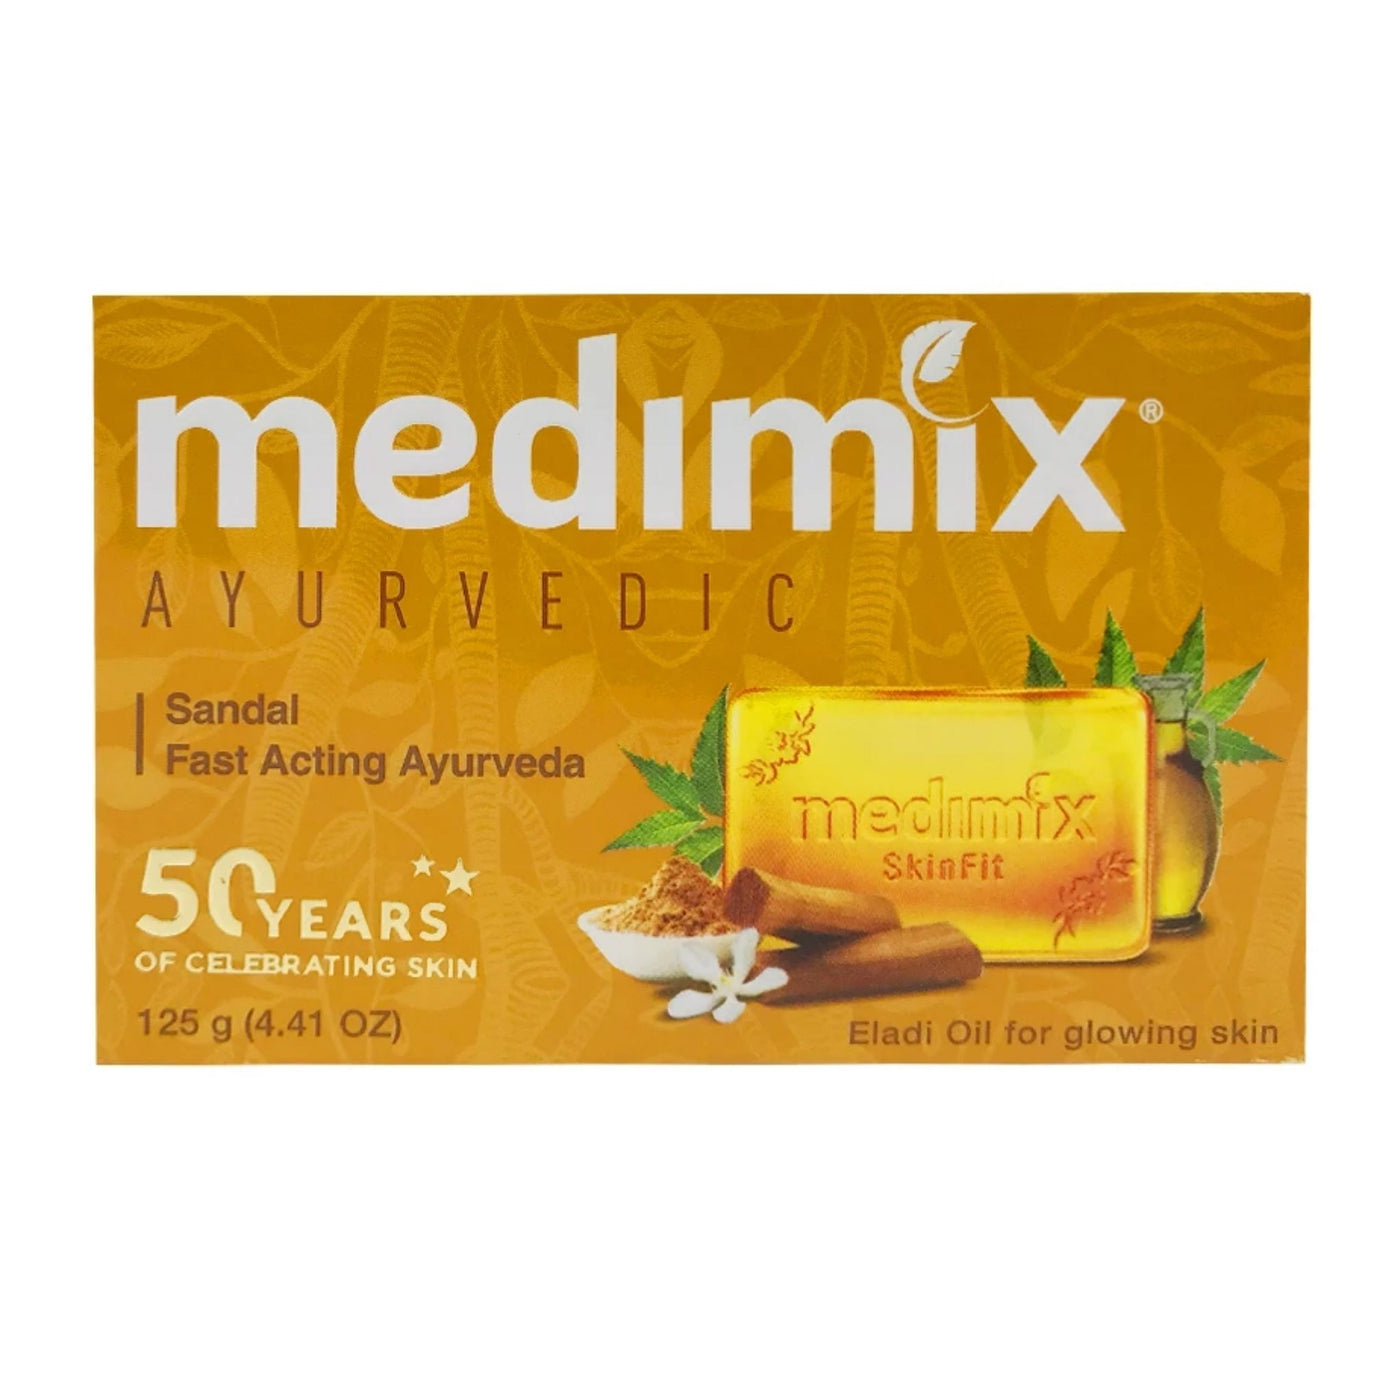 Medimix Sandal - tvål